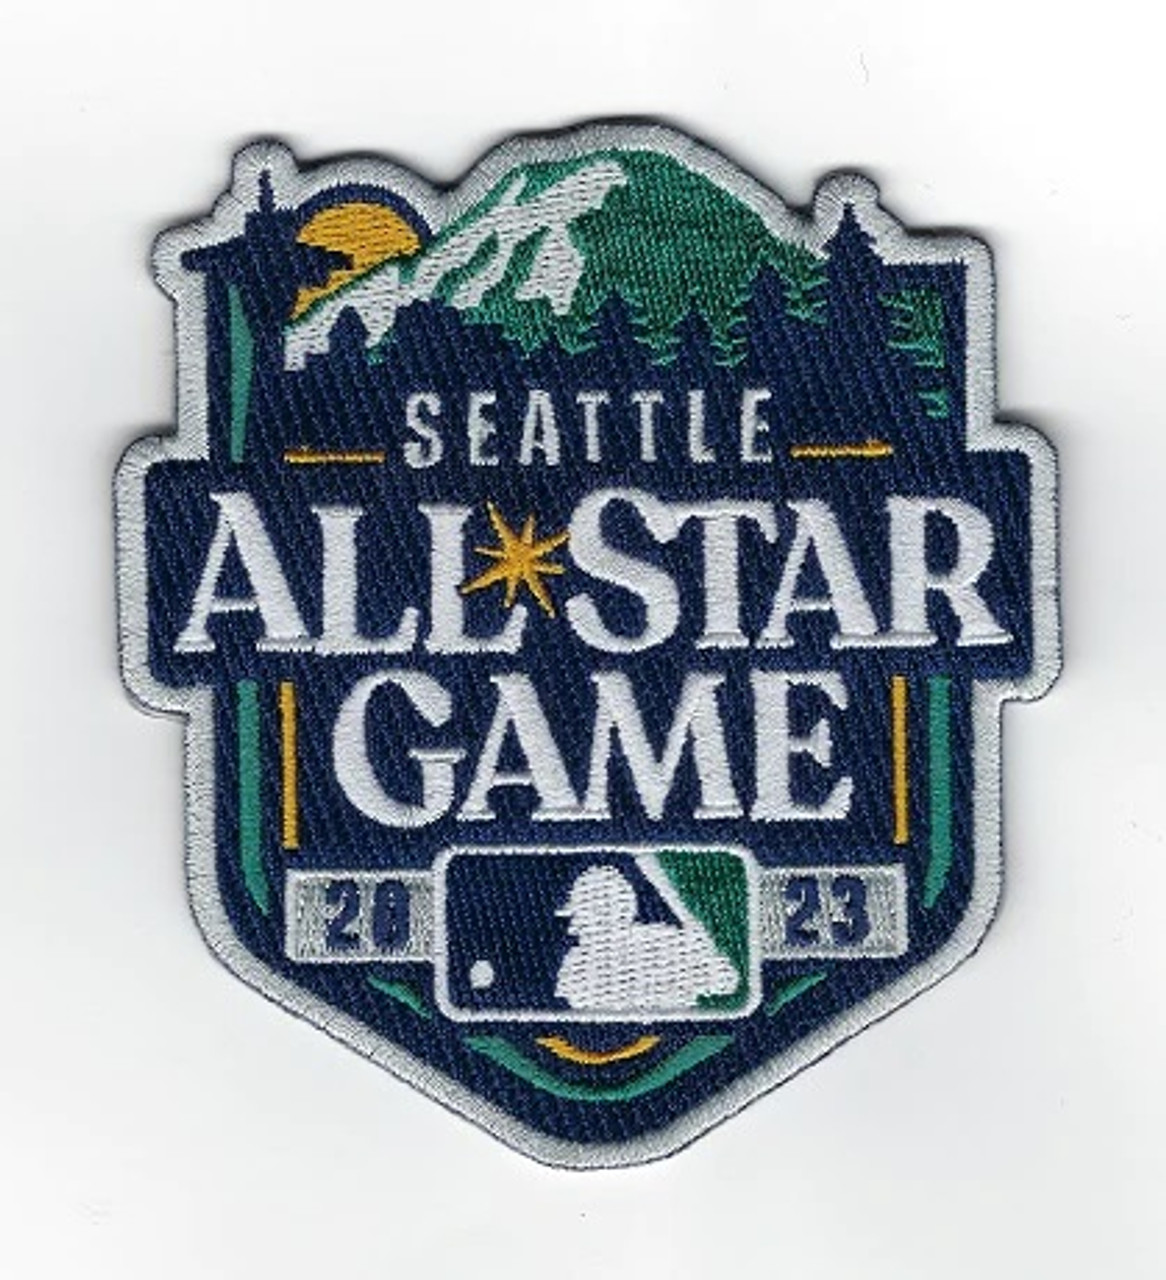 MLB unveils 2023 All-Star Game jerseys